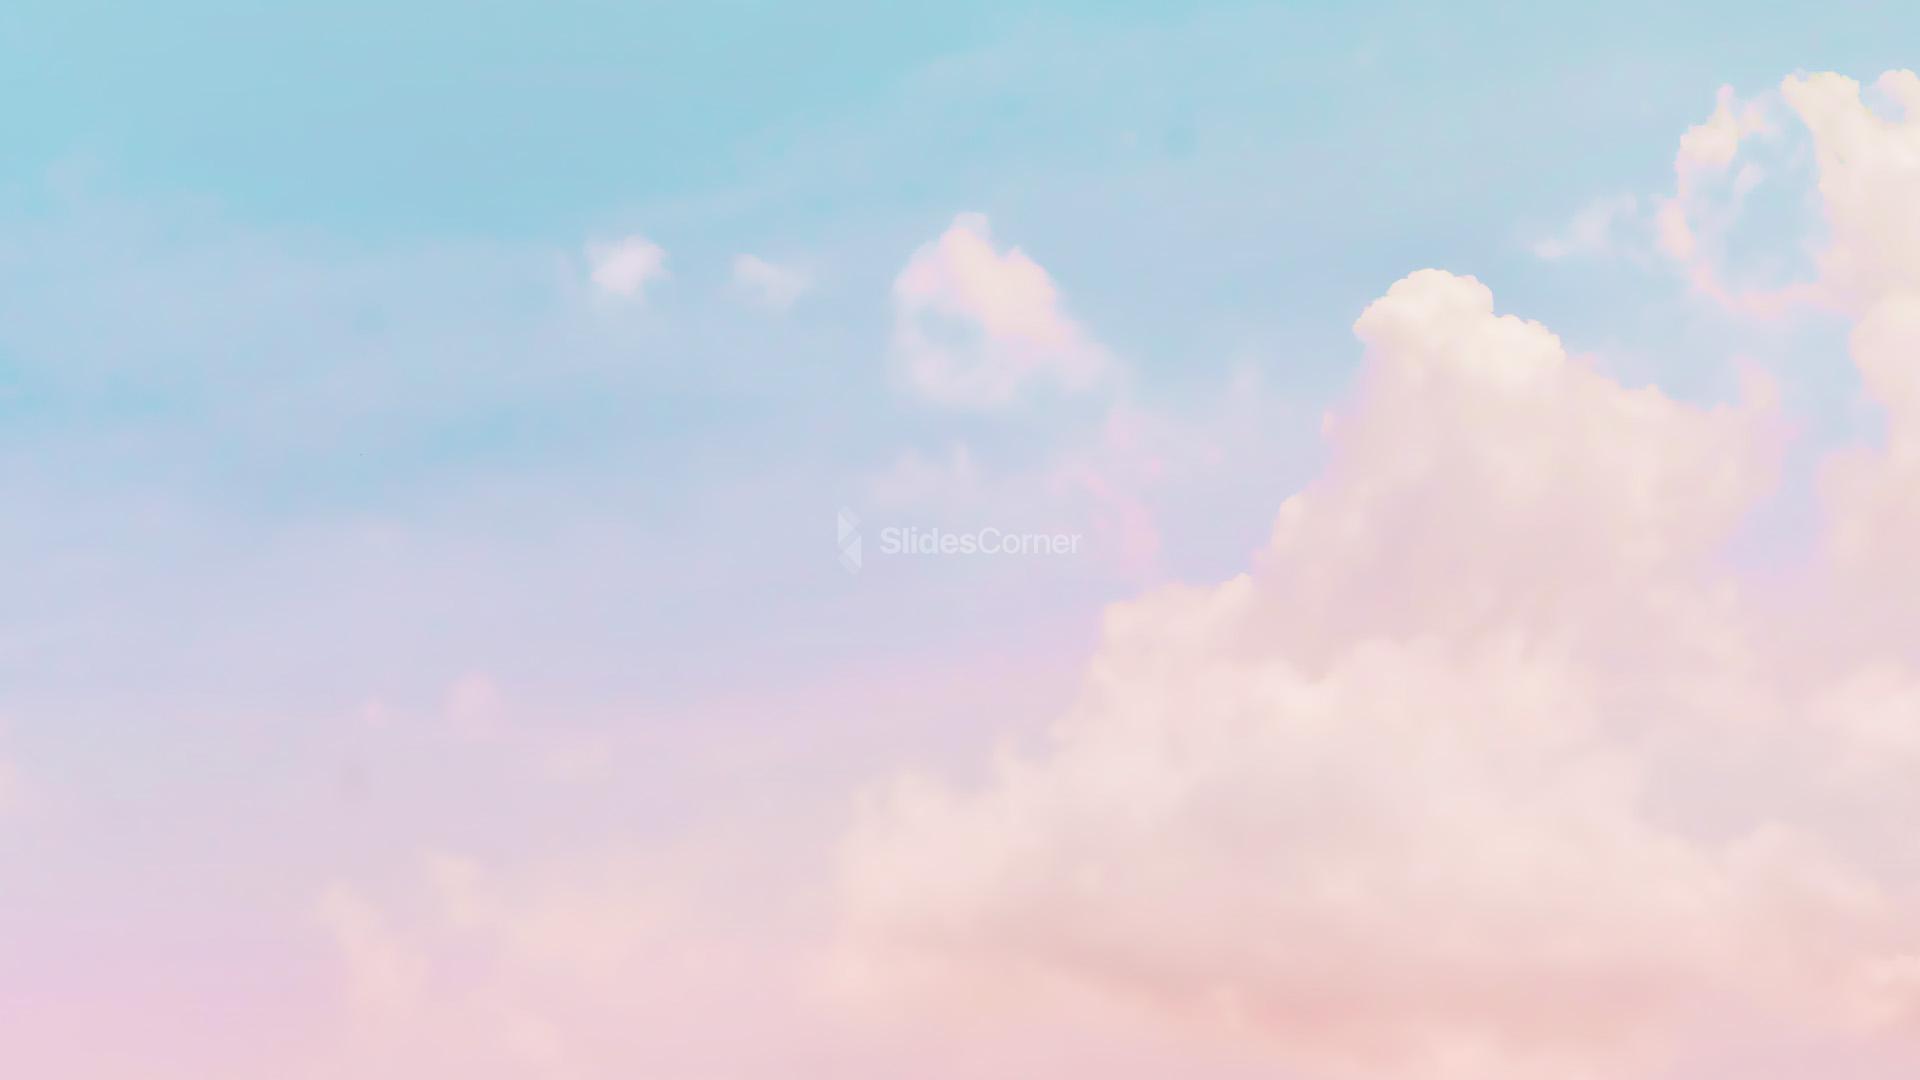 Download wallpaper 3840x2160 clouds sky porous pastel light 4k uhd 169  hd background